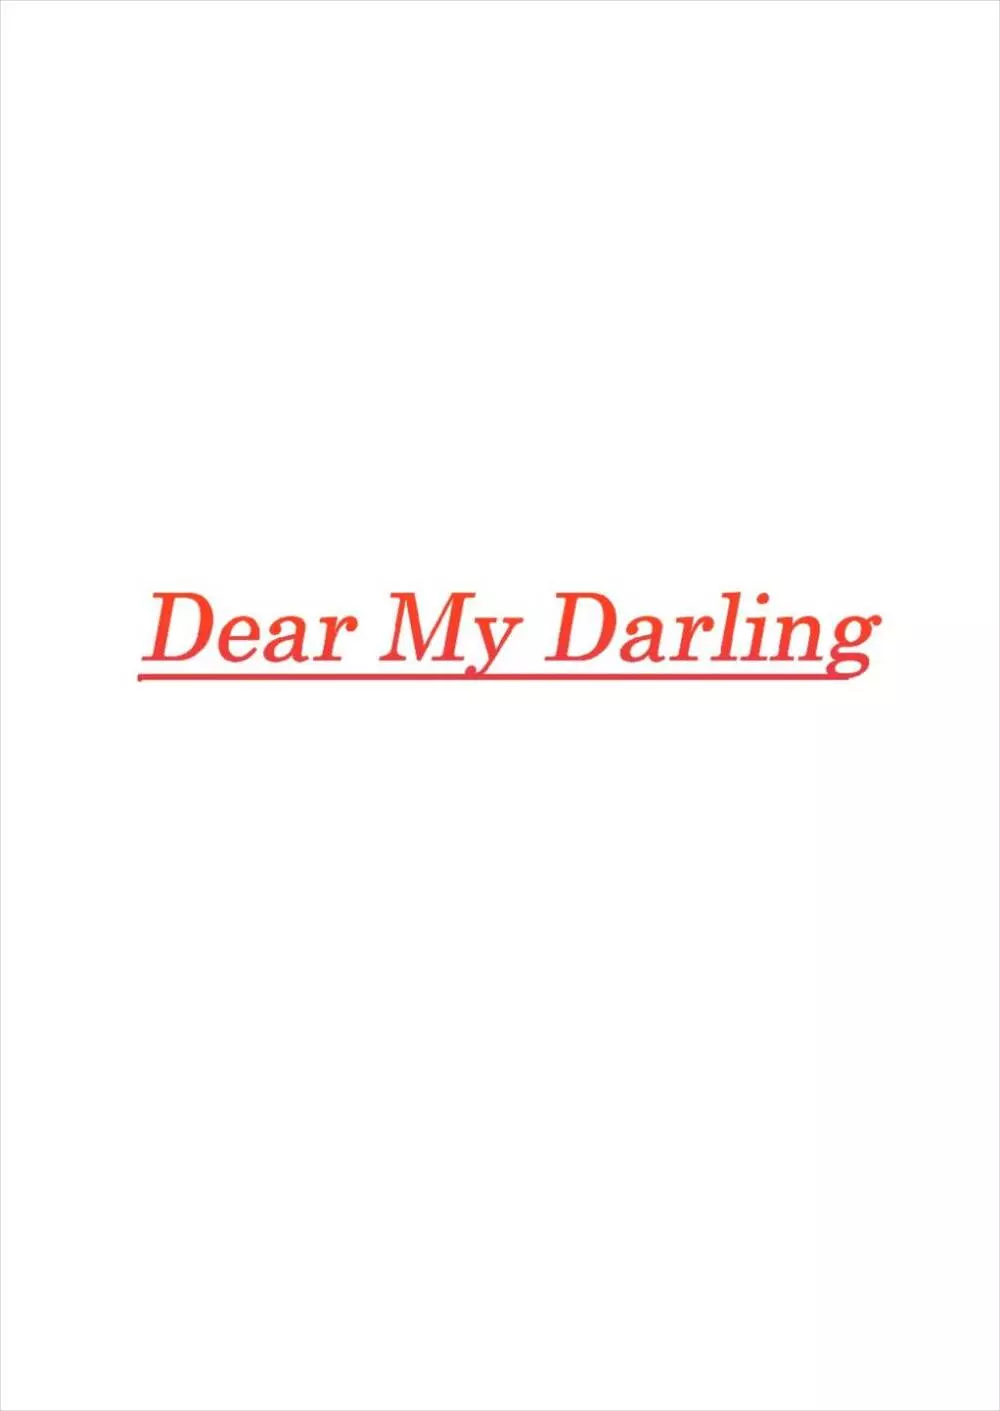 Dear My Darling Page.2